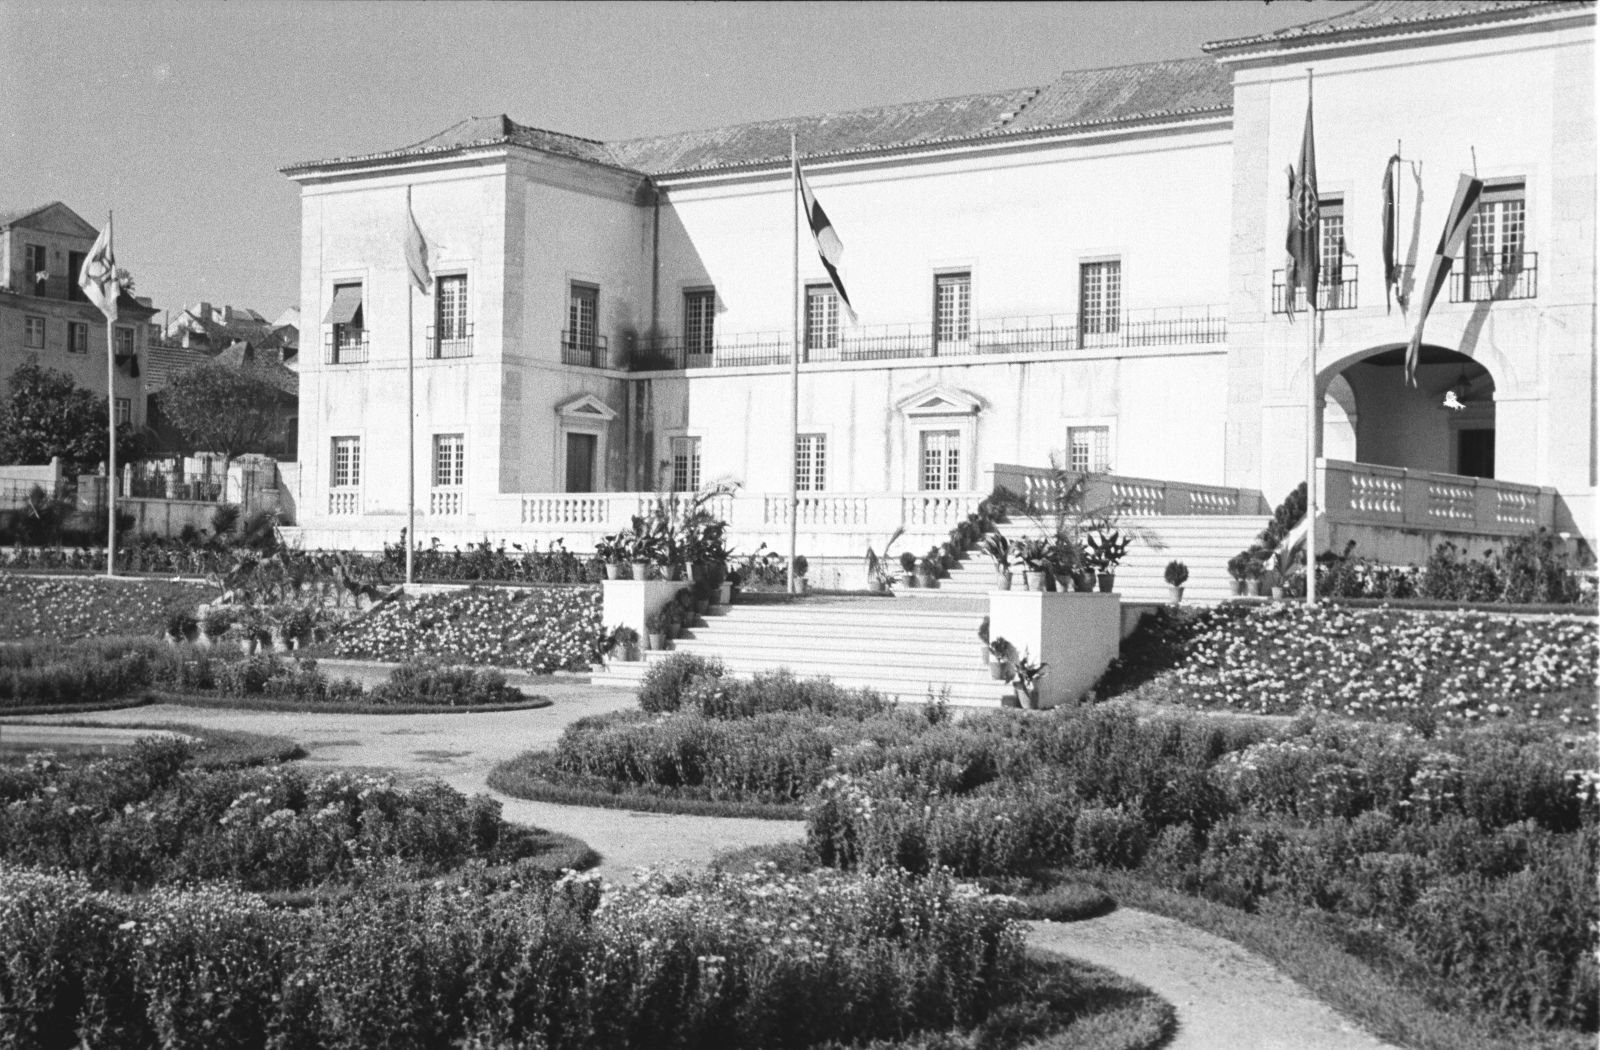 Museum (Fassade) und Promenade (Garten), 1951. IICT Photography Collection, INV. ULISBOA-IICT-JBT-25864